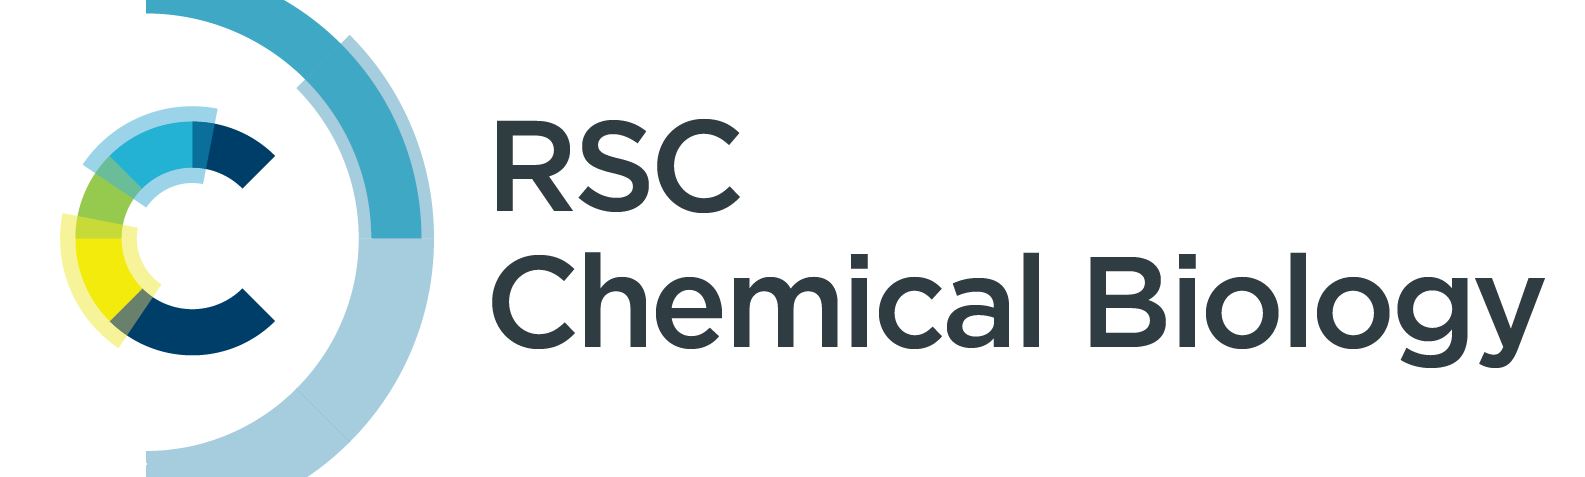 RSC Chemical Biology logo